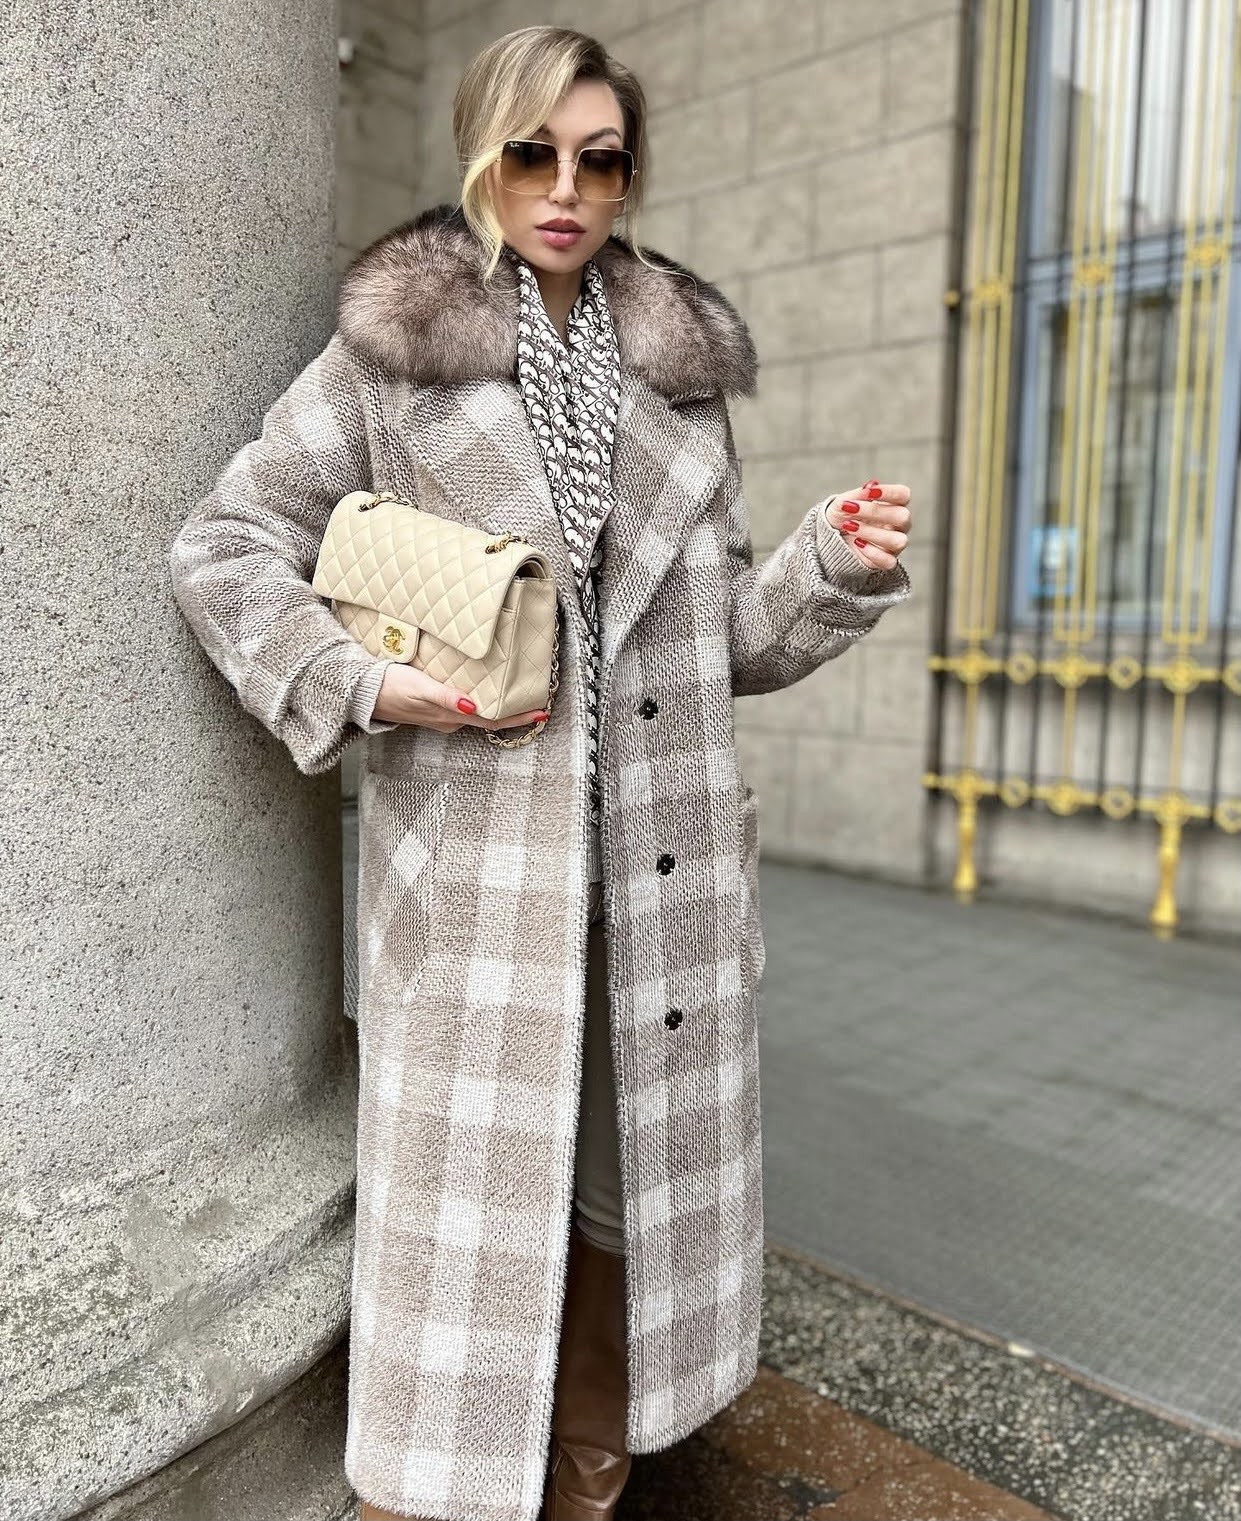 Valentina Safronova in an aristocrat chic fashion look - Slaylebrity